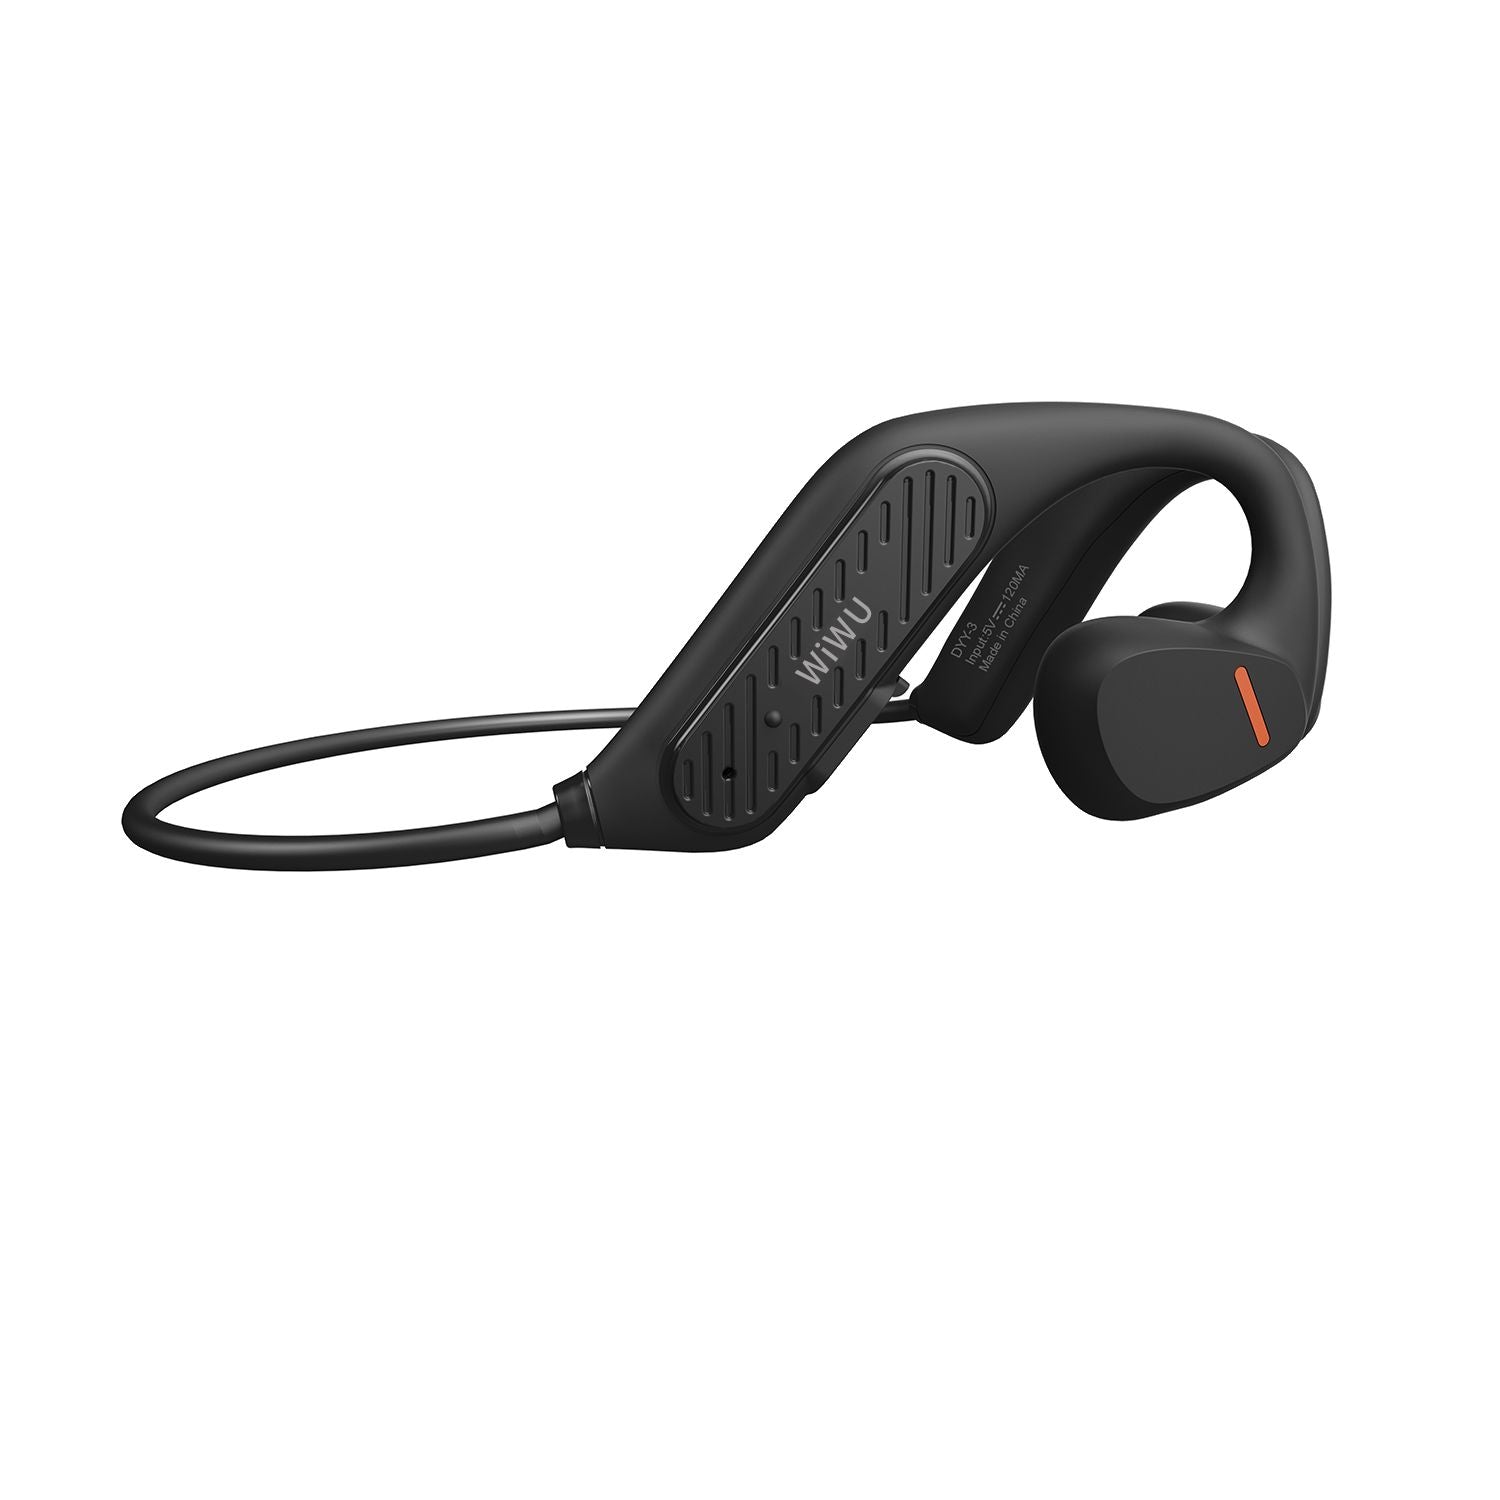 Buy Wiwu Q1 air conduction wireless headset - black in Jordan - Phonatech